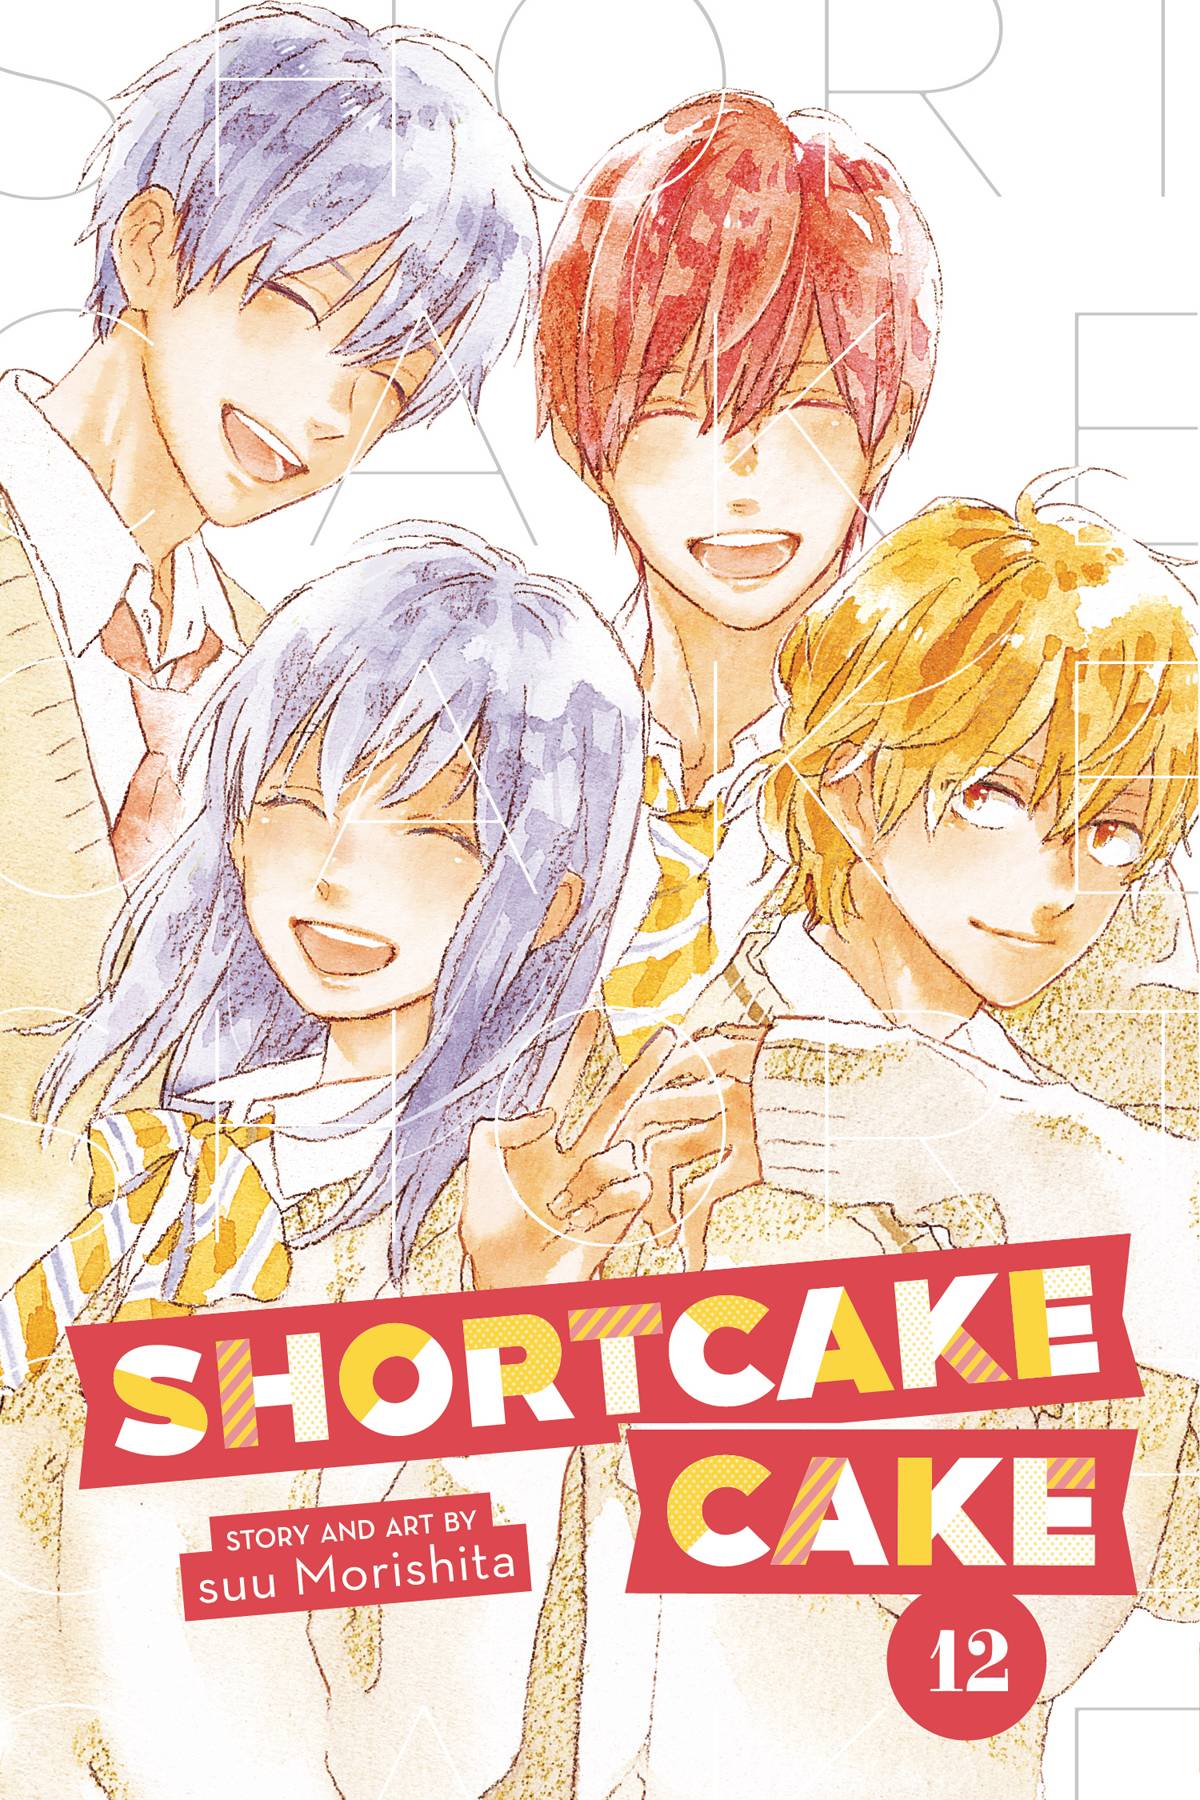 SHORTCAKE CAKE GN VOL 12 (OF 12)